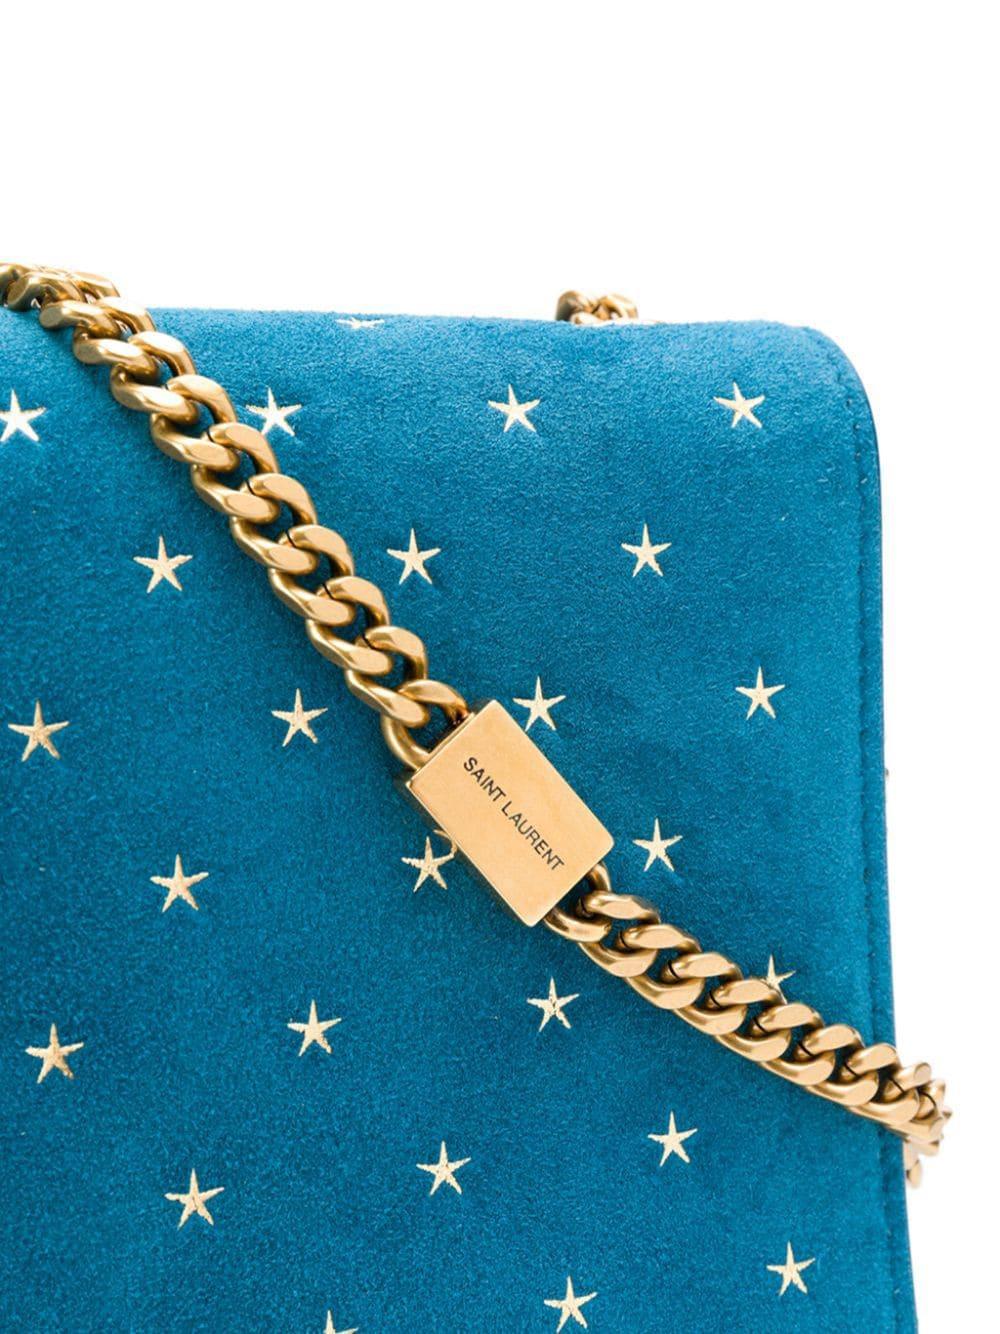 YVES SAINT LAURENT Kate Small Grain De Poudre Crossbody Bag Blue